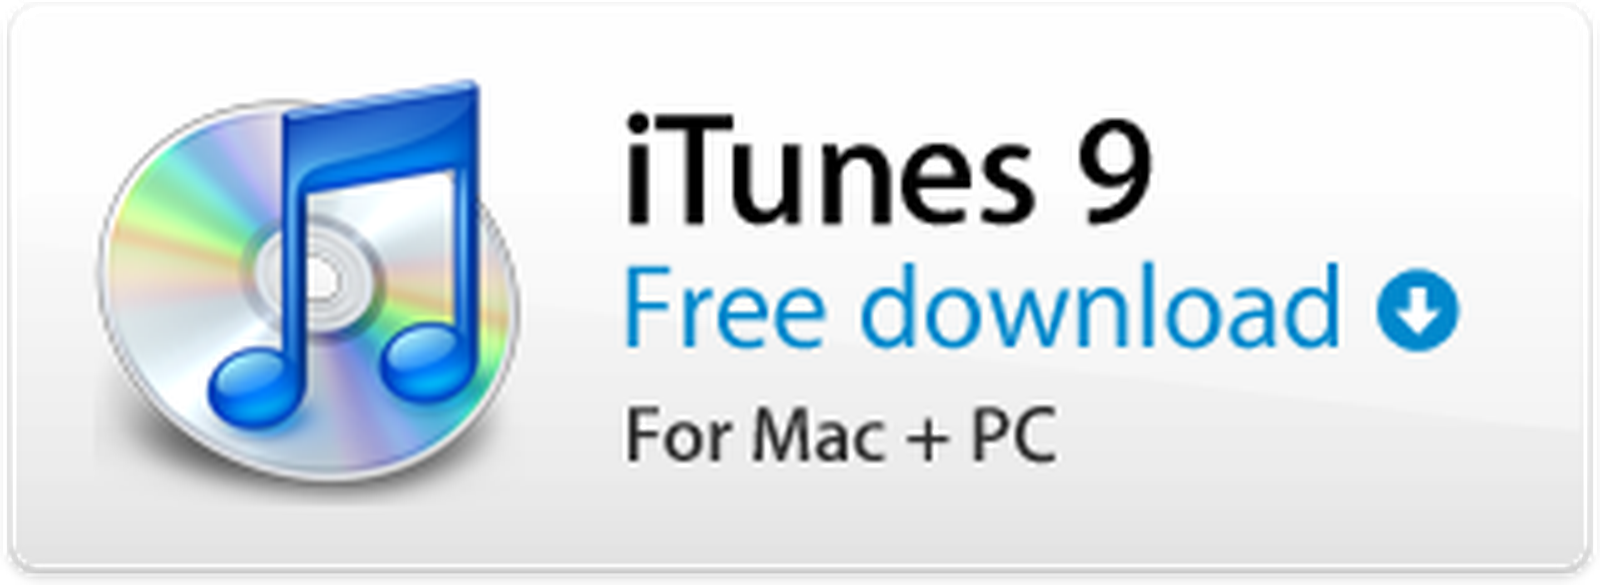 itunes 9.2 1 mac download